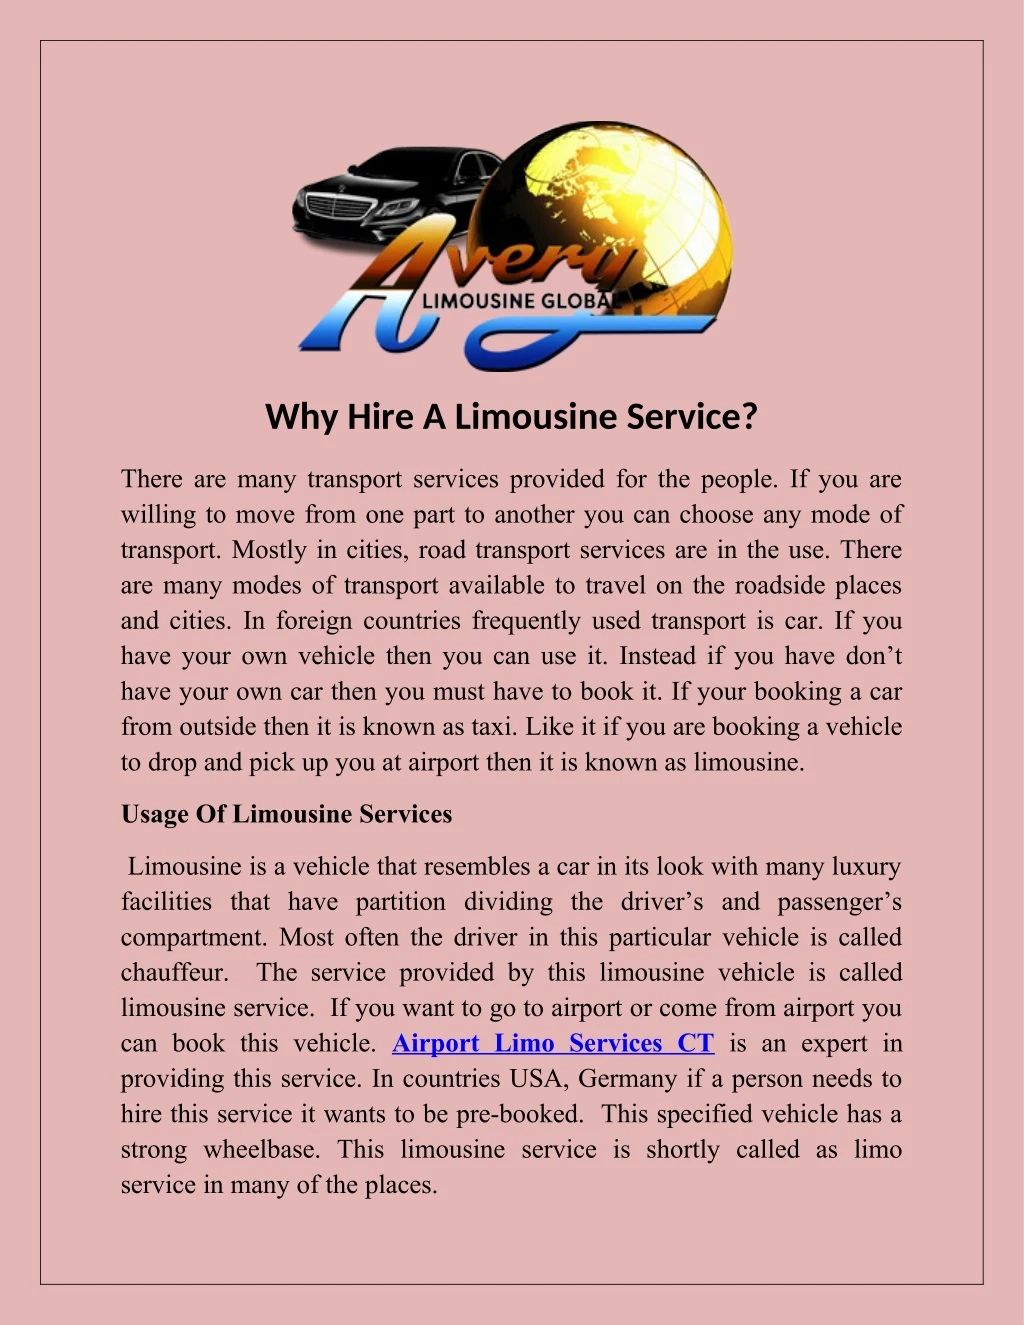 why hire a limousine service